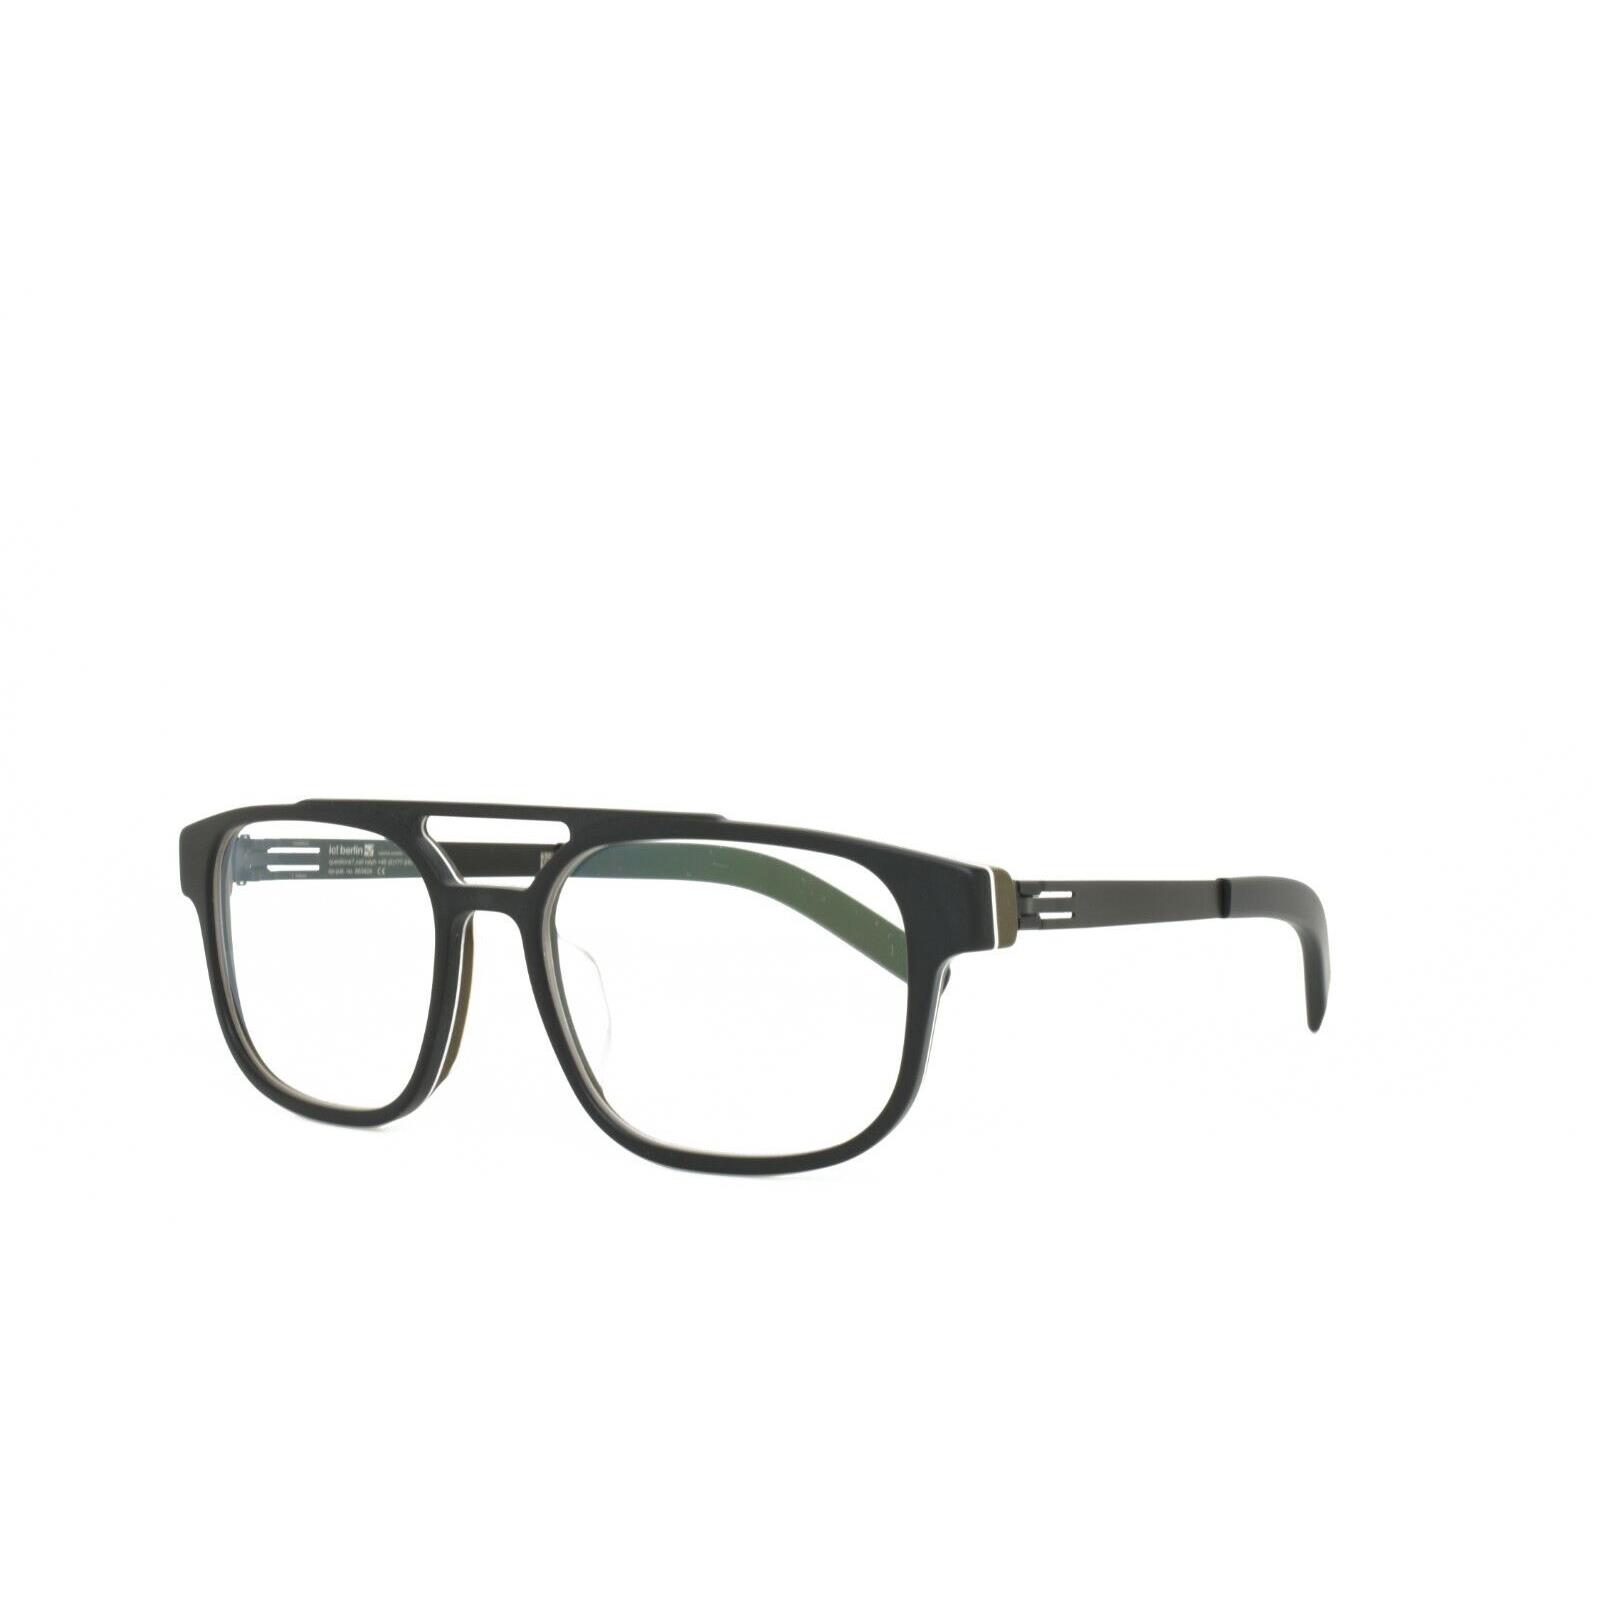 iC Berlin Eyeglasses Ralphi East Black 50-17-145 Asian Fit